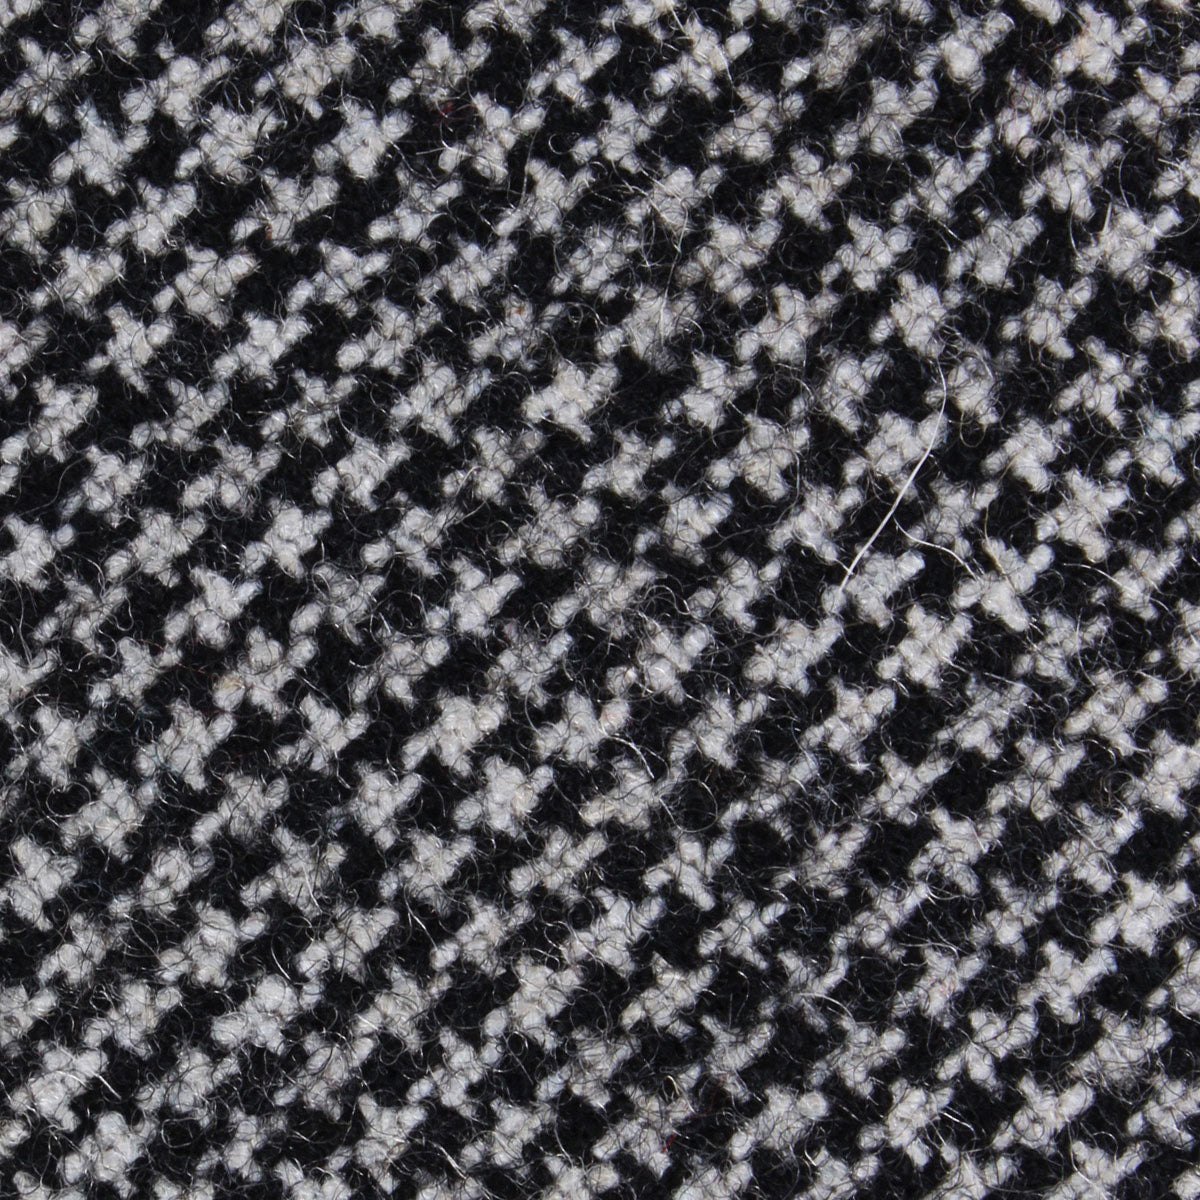 Sheepish Black Houndstooth Wool Fabric Skinny Tie